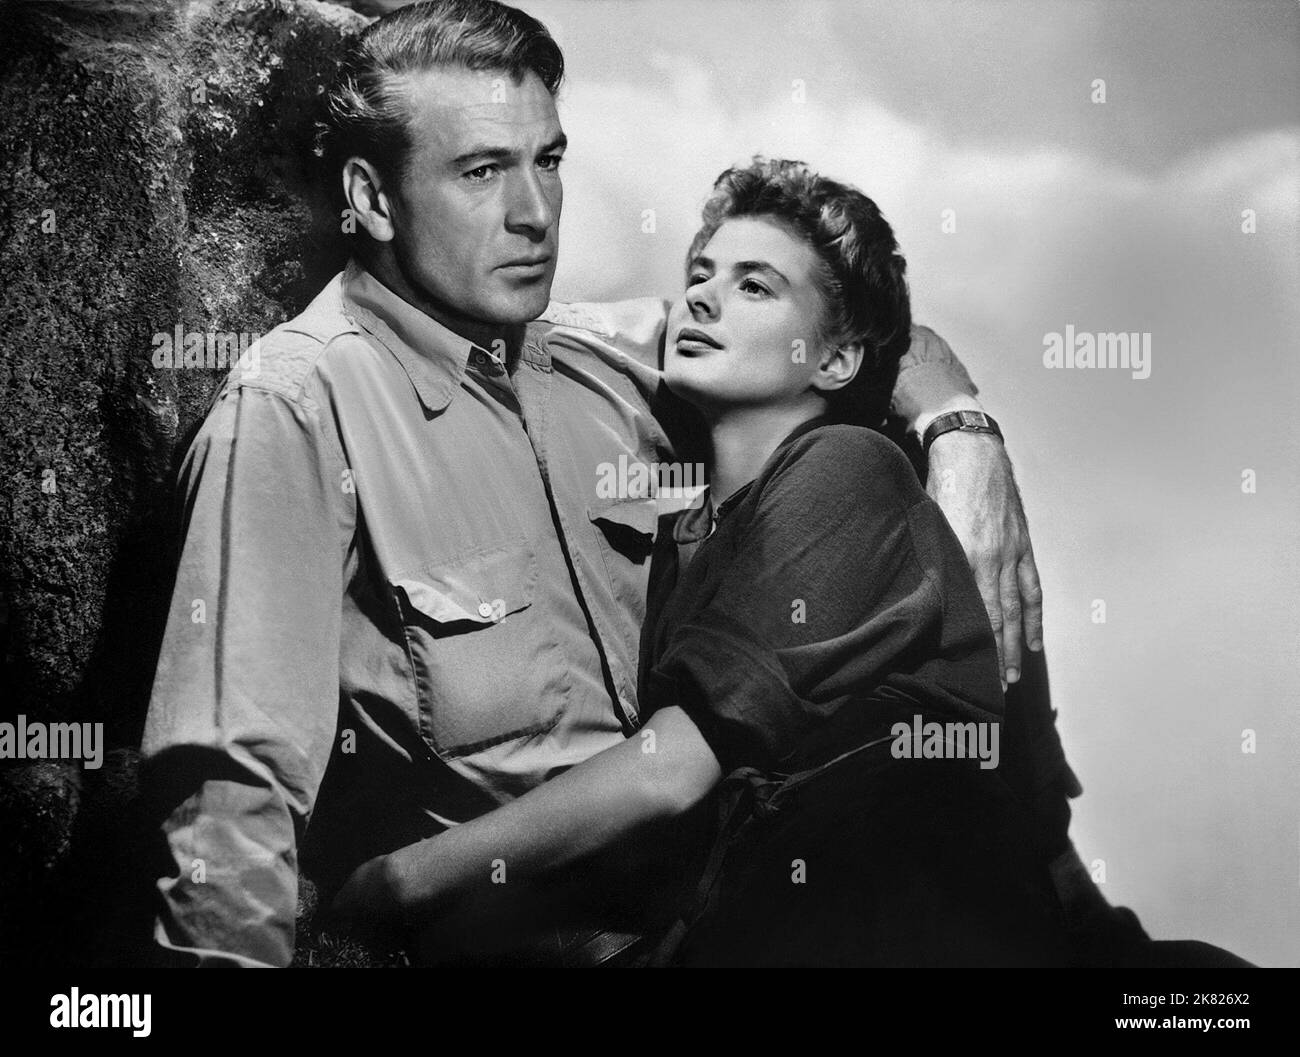 Gary Cooper & Ingrid Bergman Film: Per chi suona la campana (USA 1943)  personaggi: Robert Jordan & Maria / Literaturverfilmung (basato sul libro  di Ernest Hemingway) regista: Sam Wood 14 luglio 1943 **